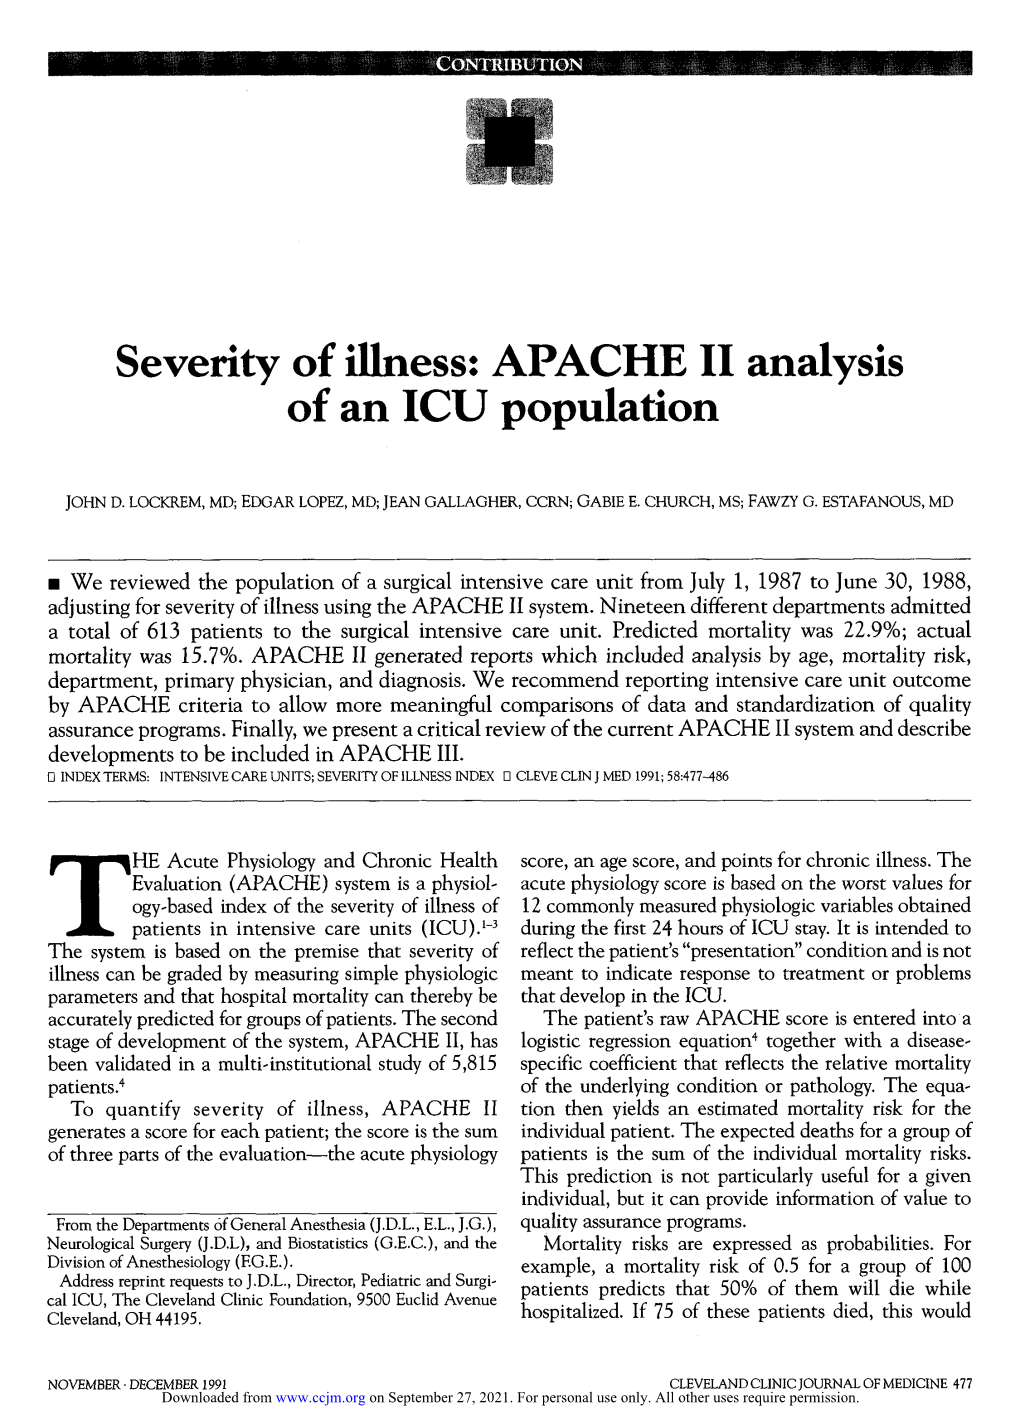 Severity of Illness: APACHE II Analysis of an ICU Population